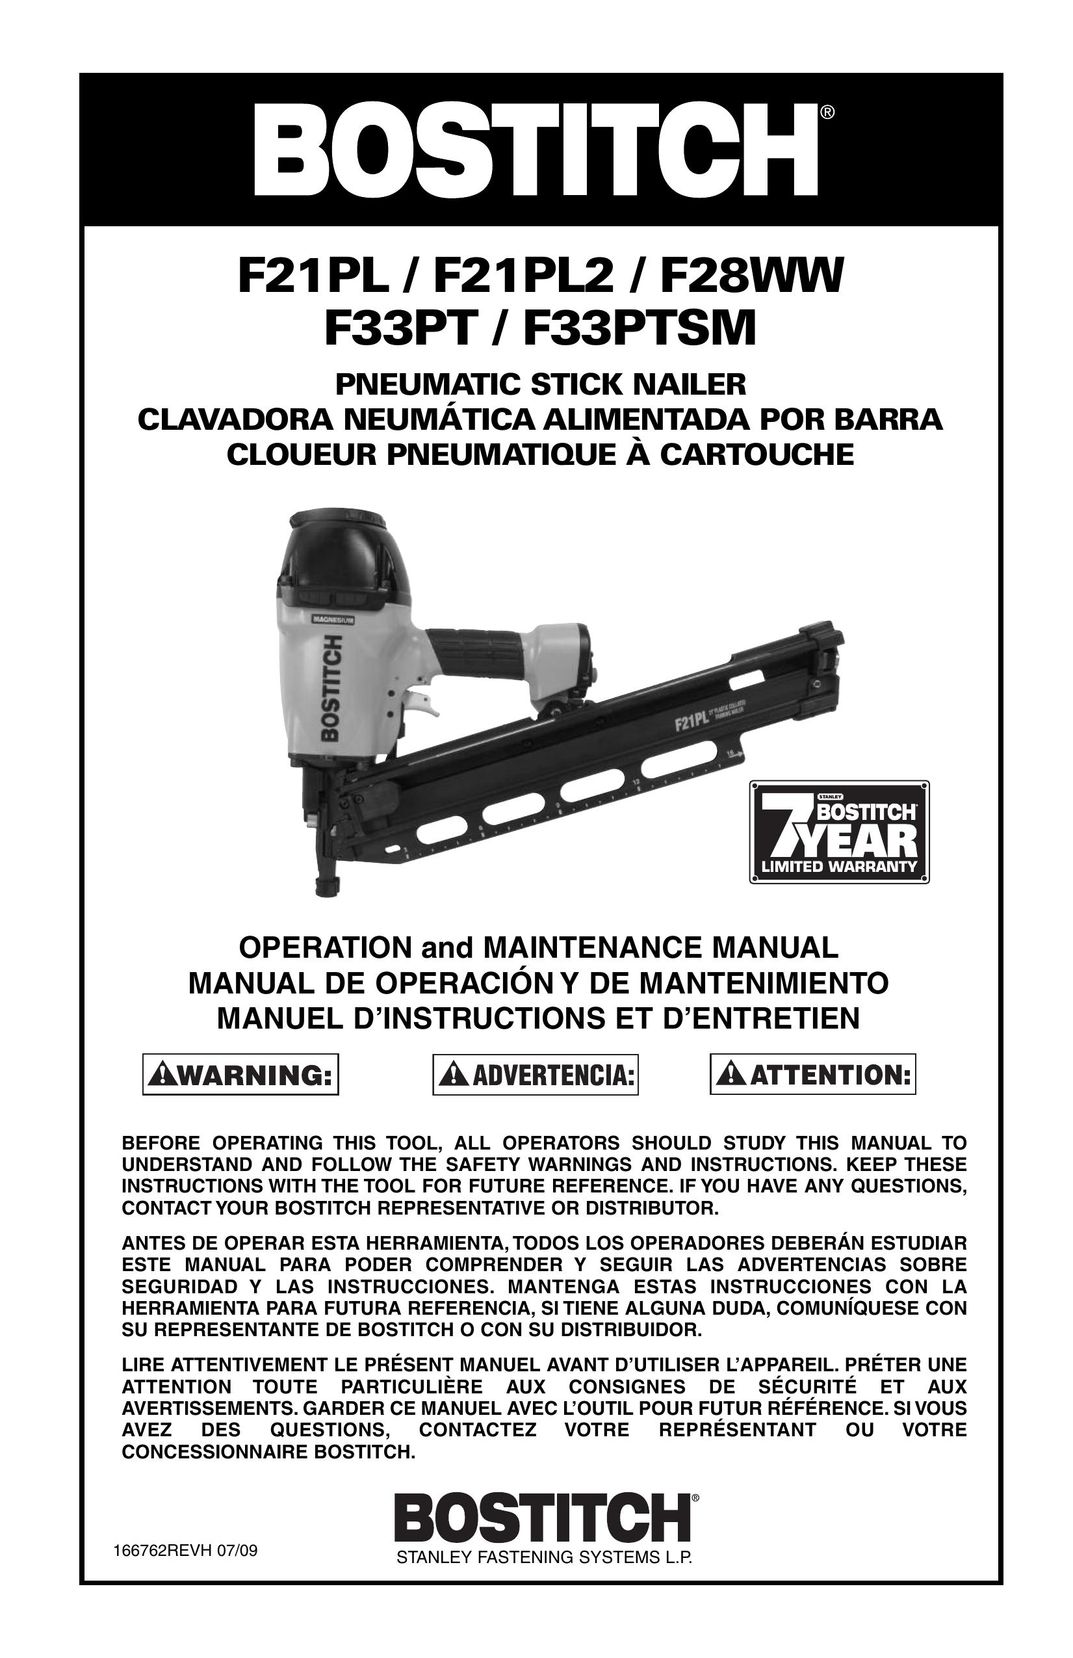 Bostitch F33PT Nail Gun User Manual